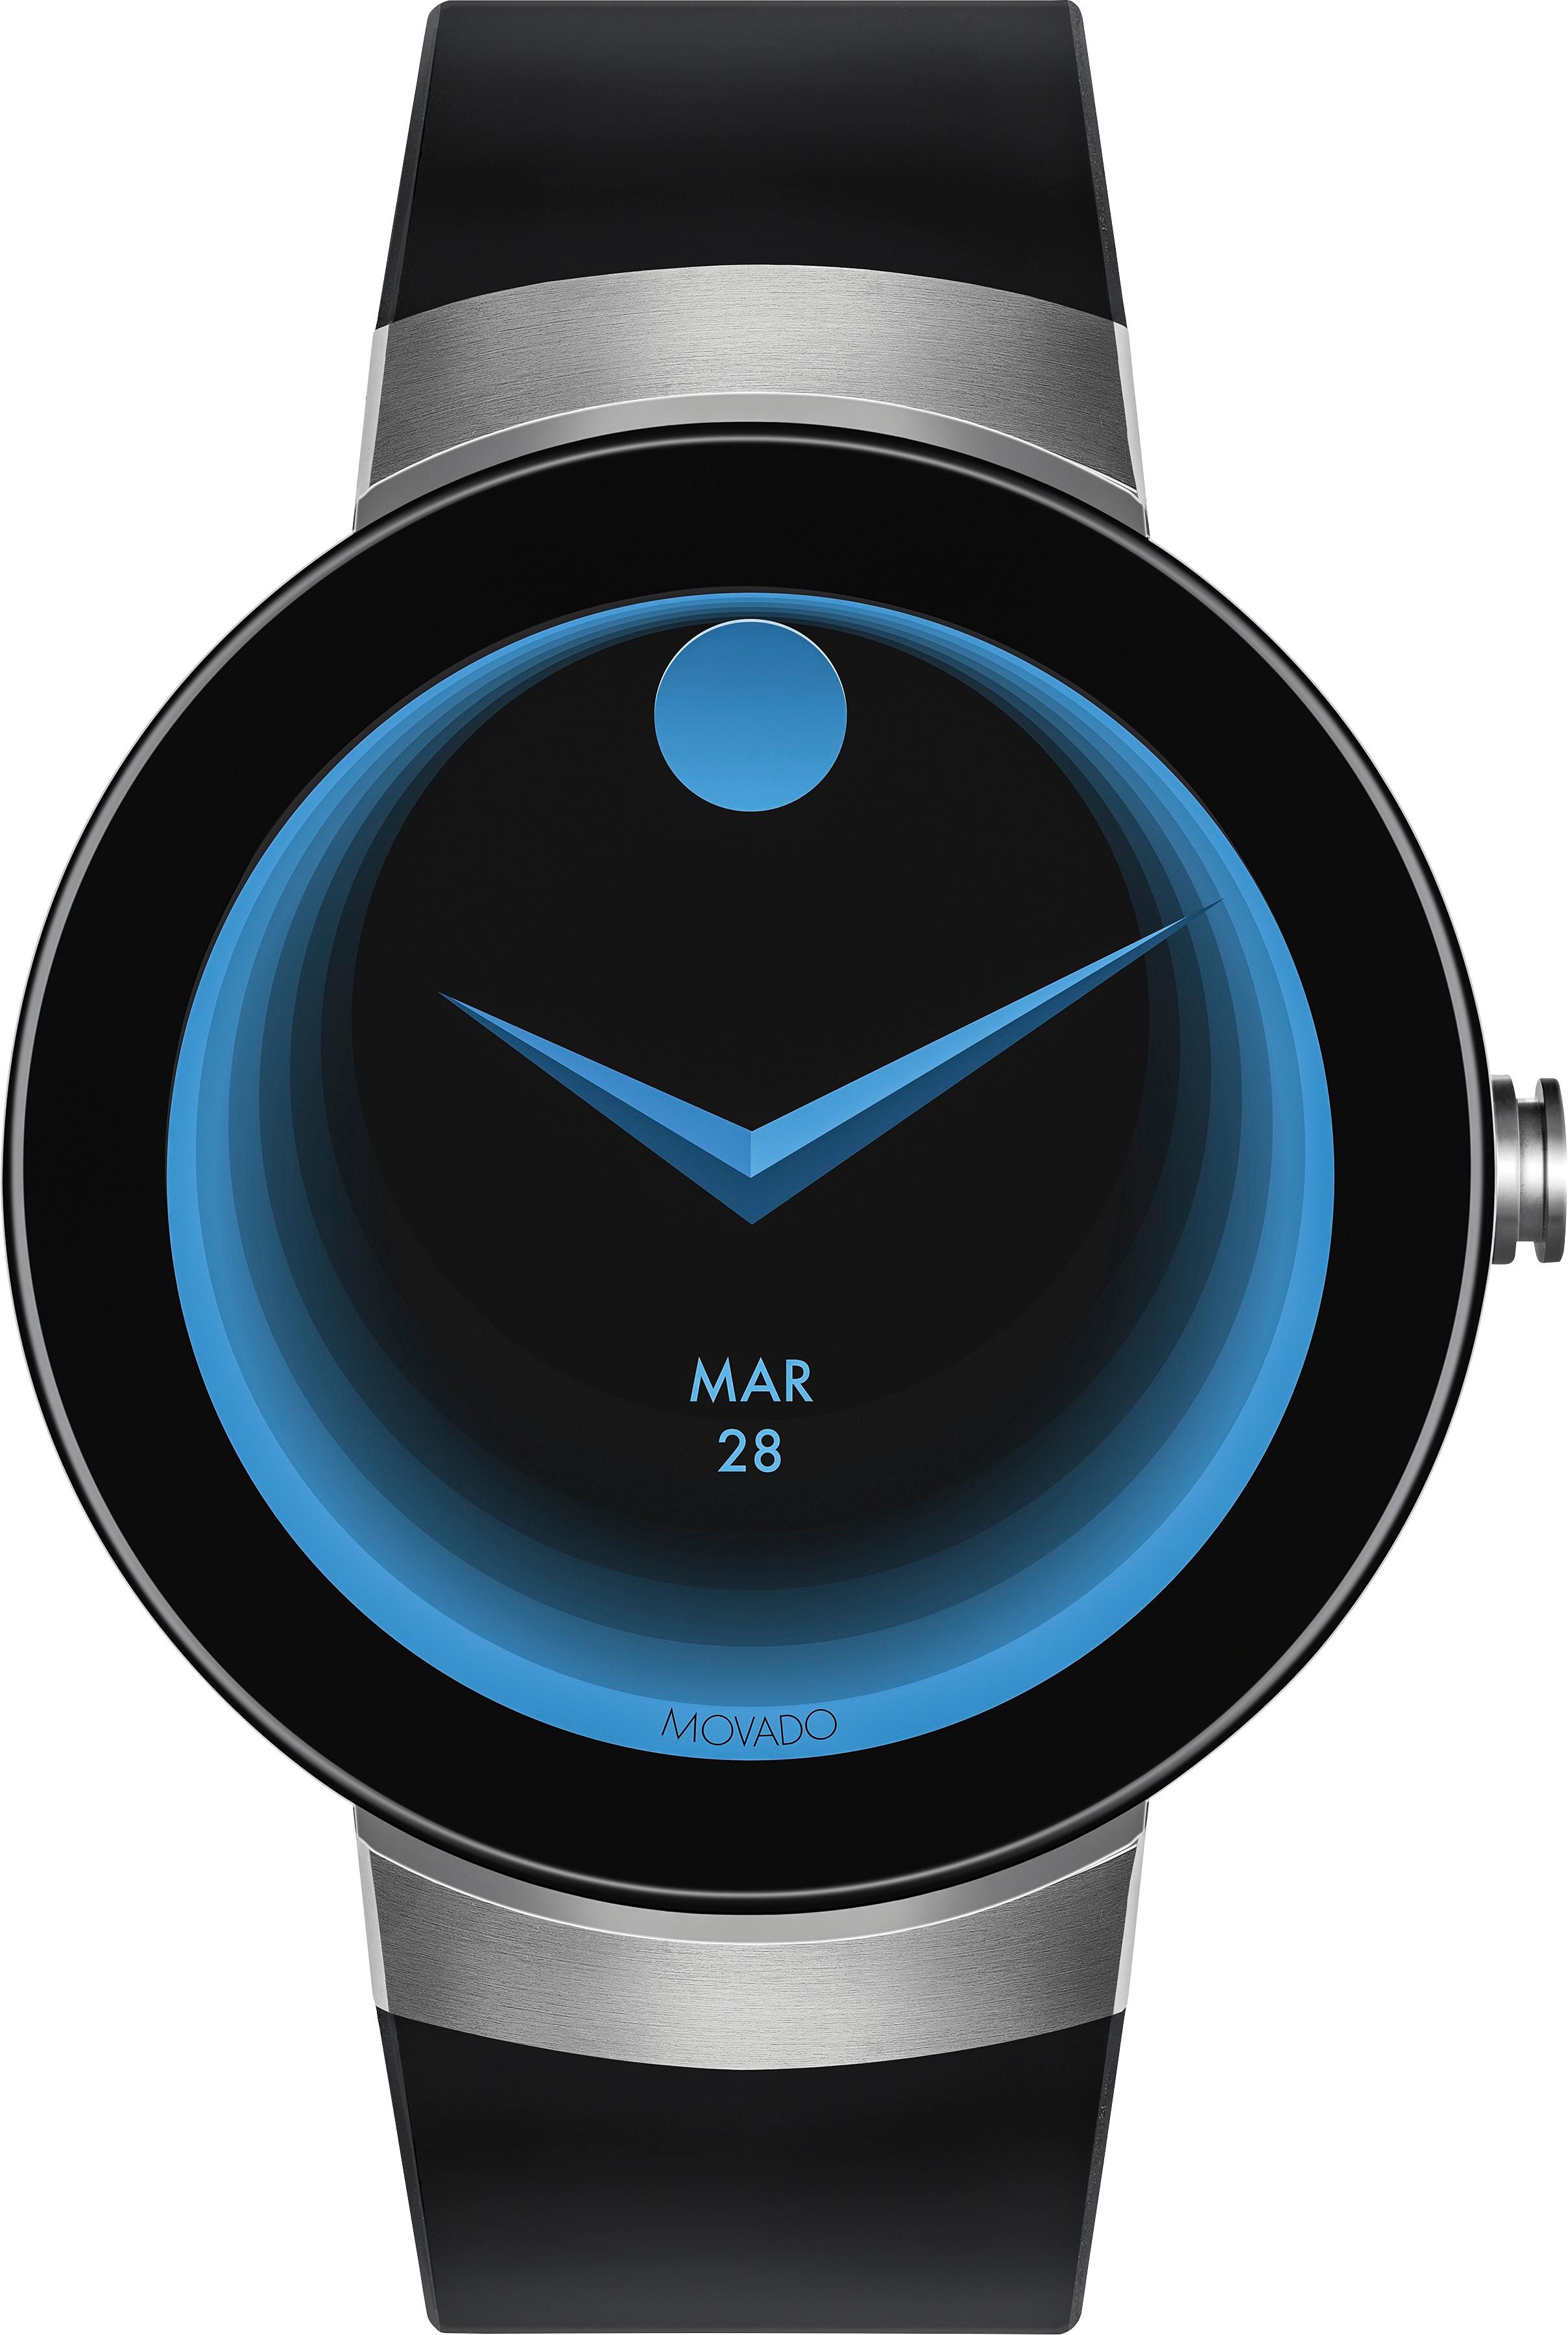 circle shape smart watches